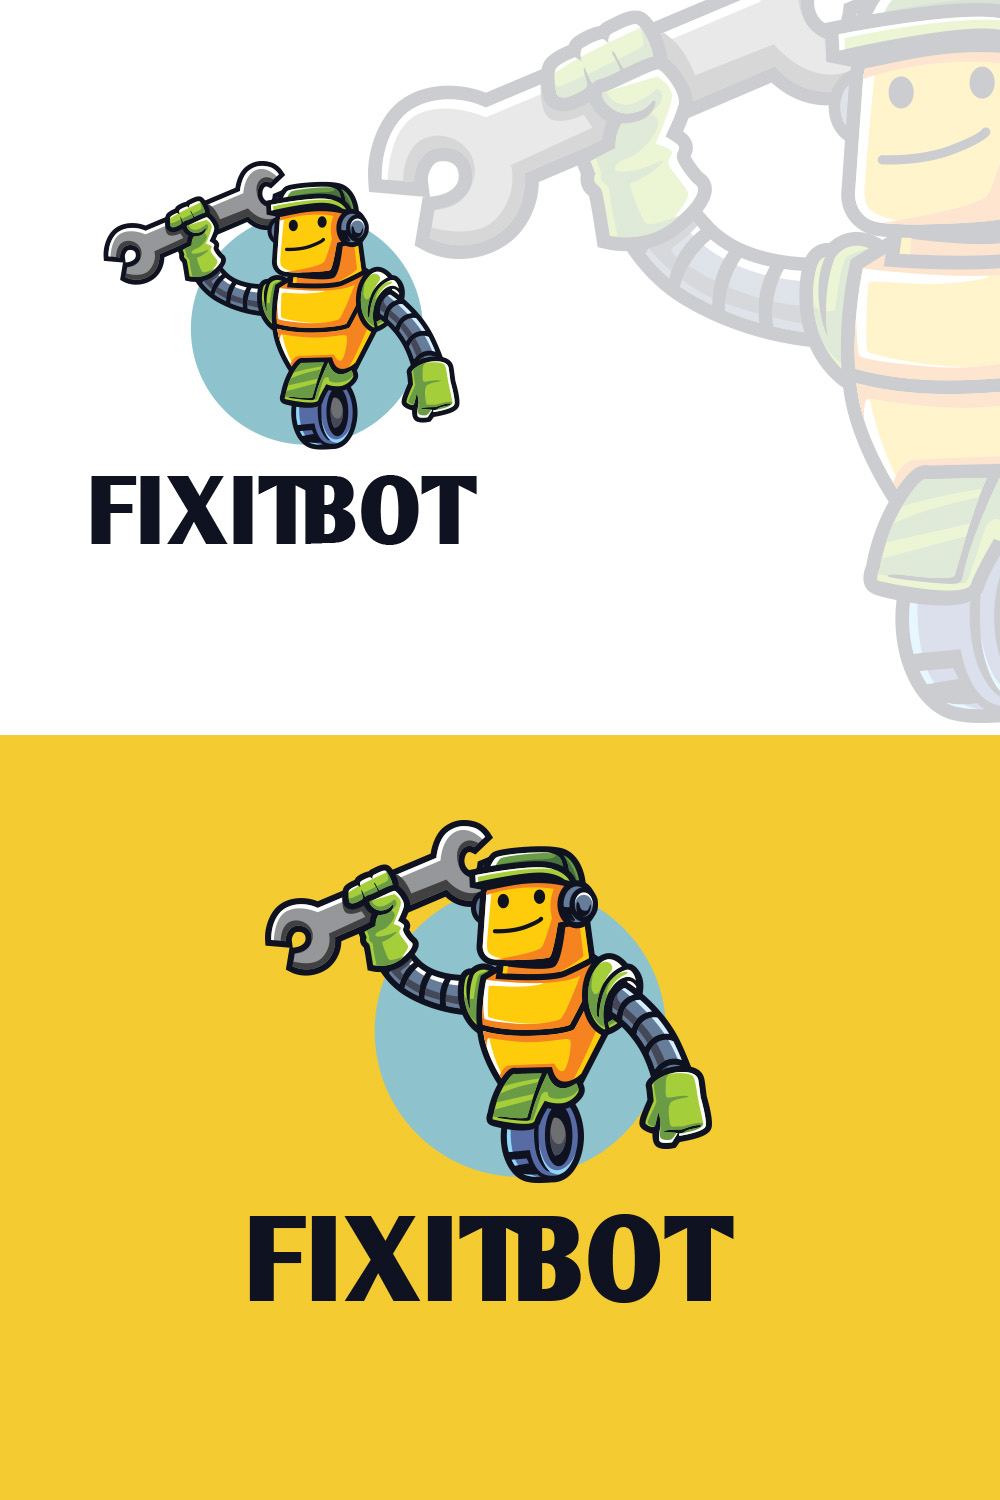 Fixing Robot Character Logo Design pinterest preview image.